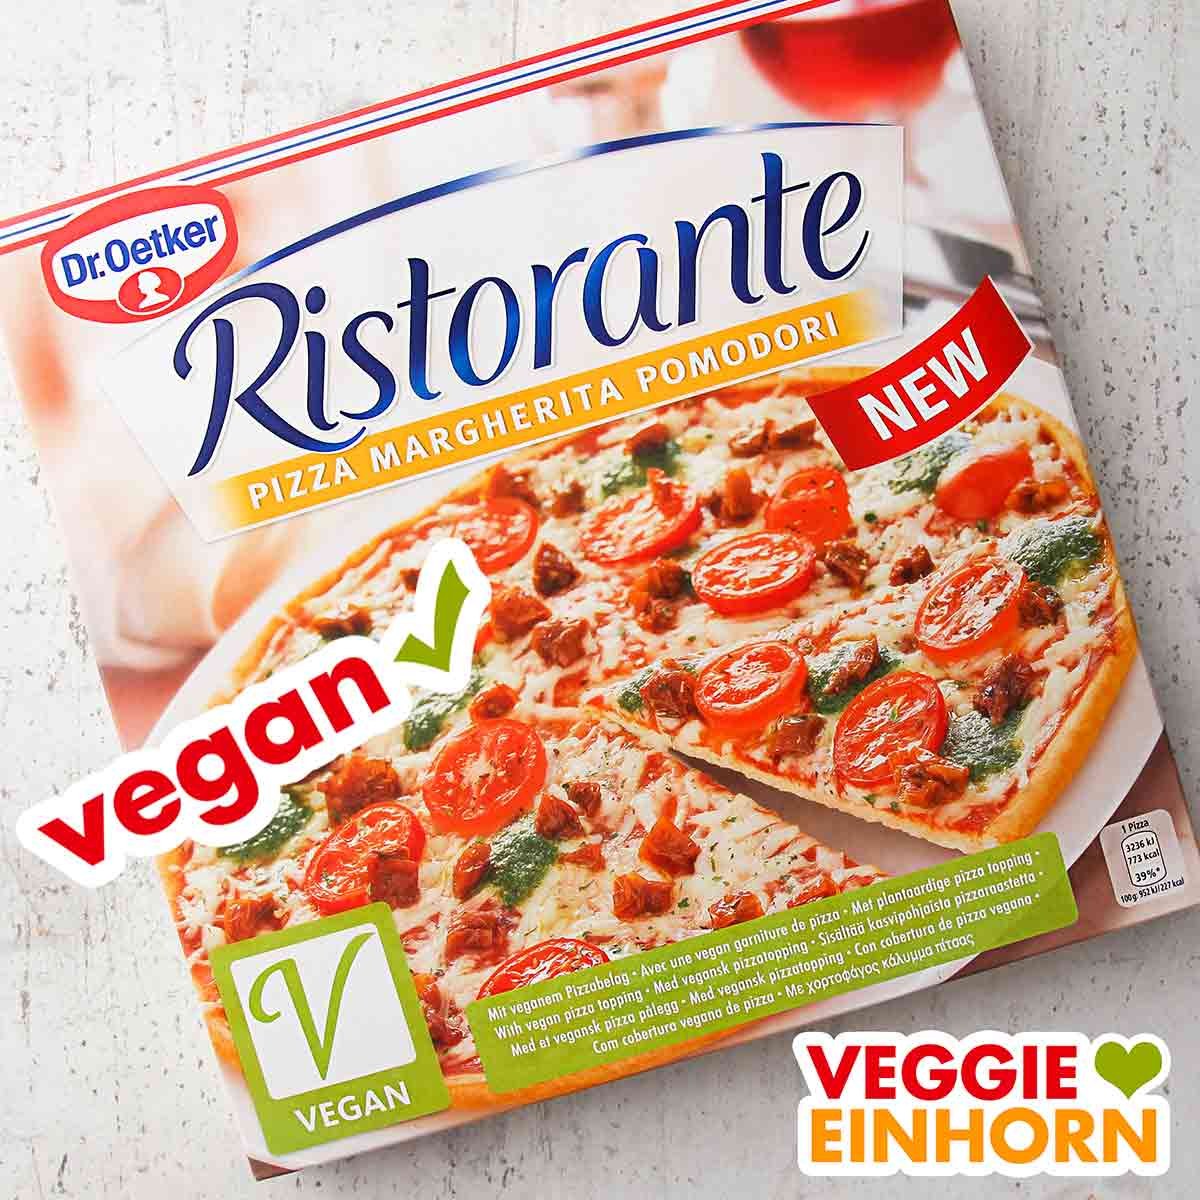 Vegane Pizza Ristorante von Dr. Oetker